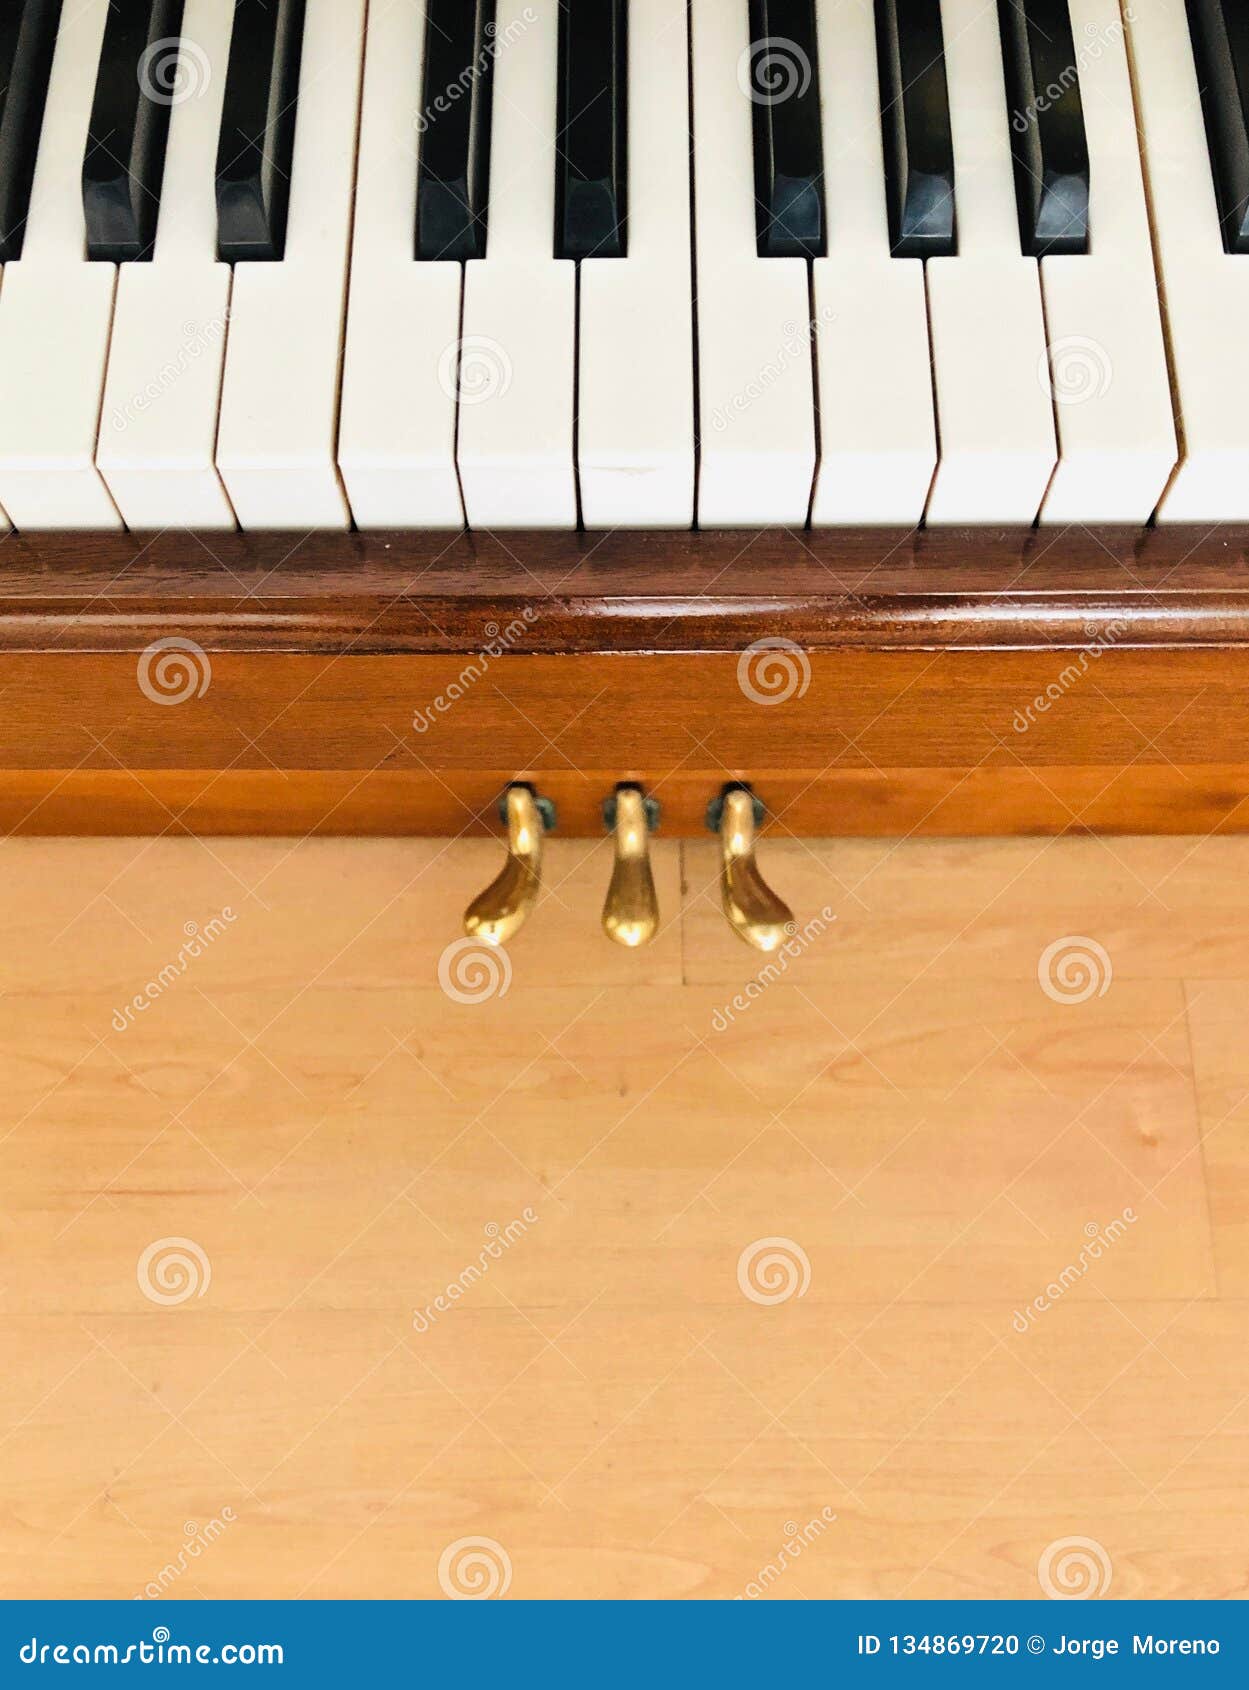 composiciÃÂ³n de teclas en blanco y negro con un piano de madera.